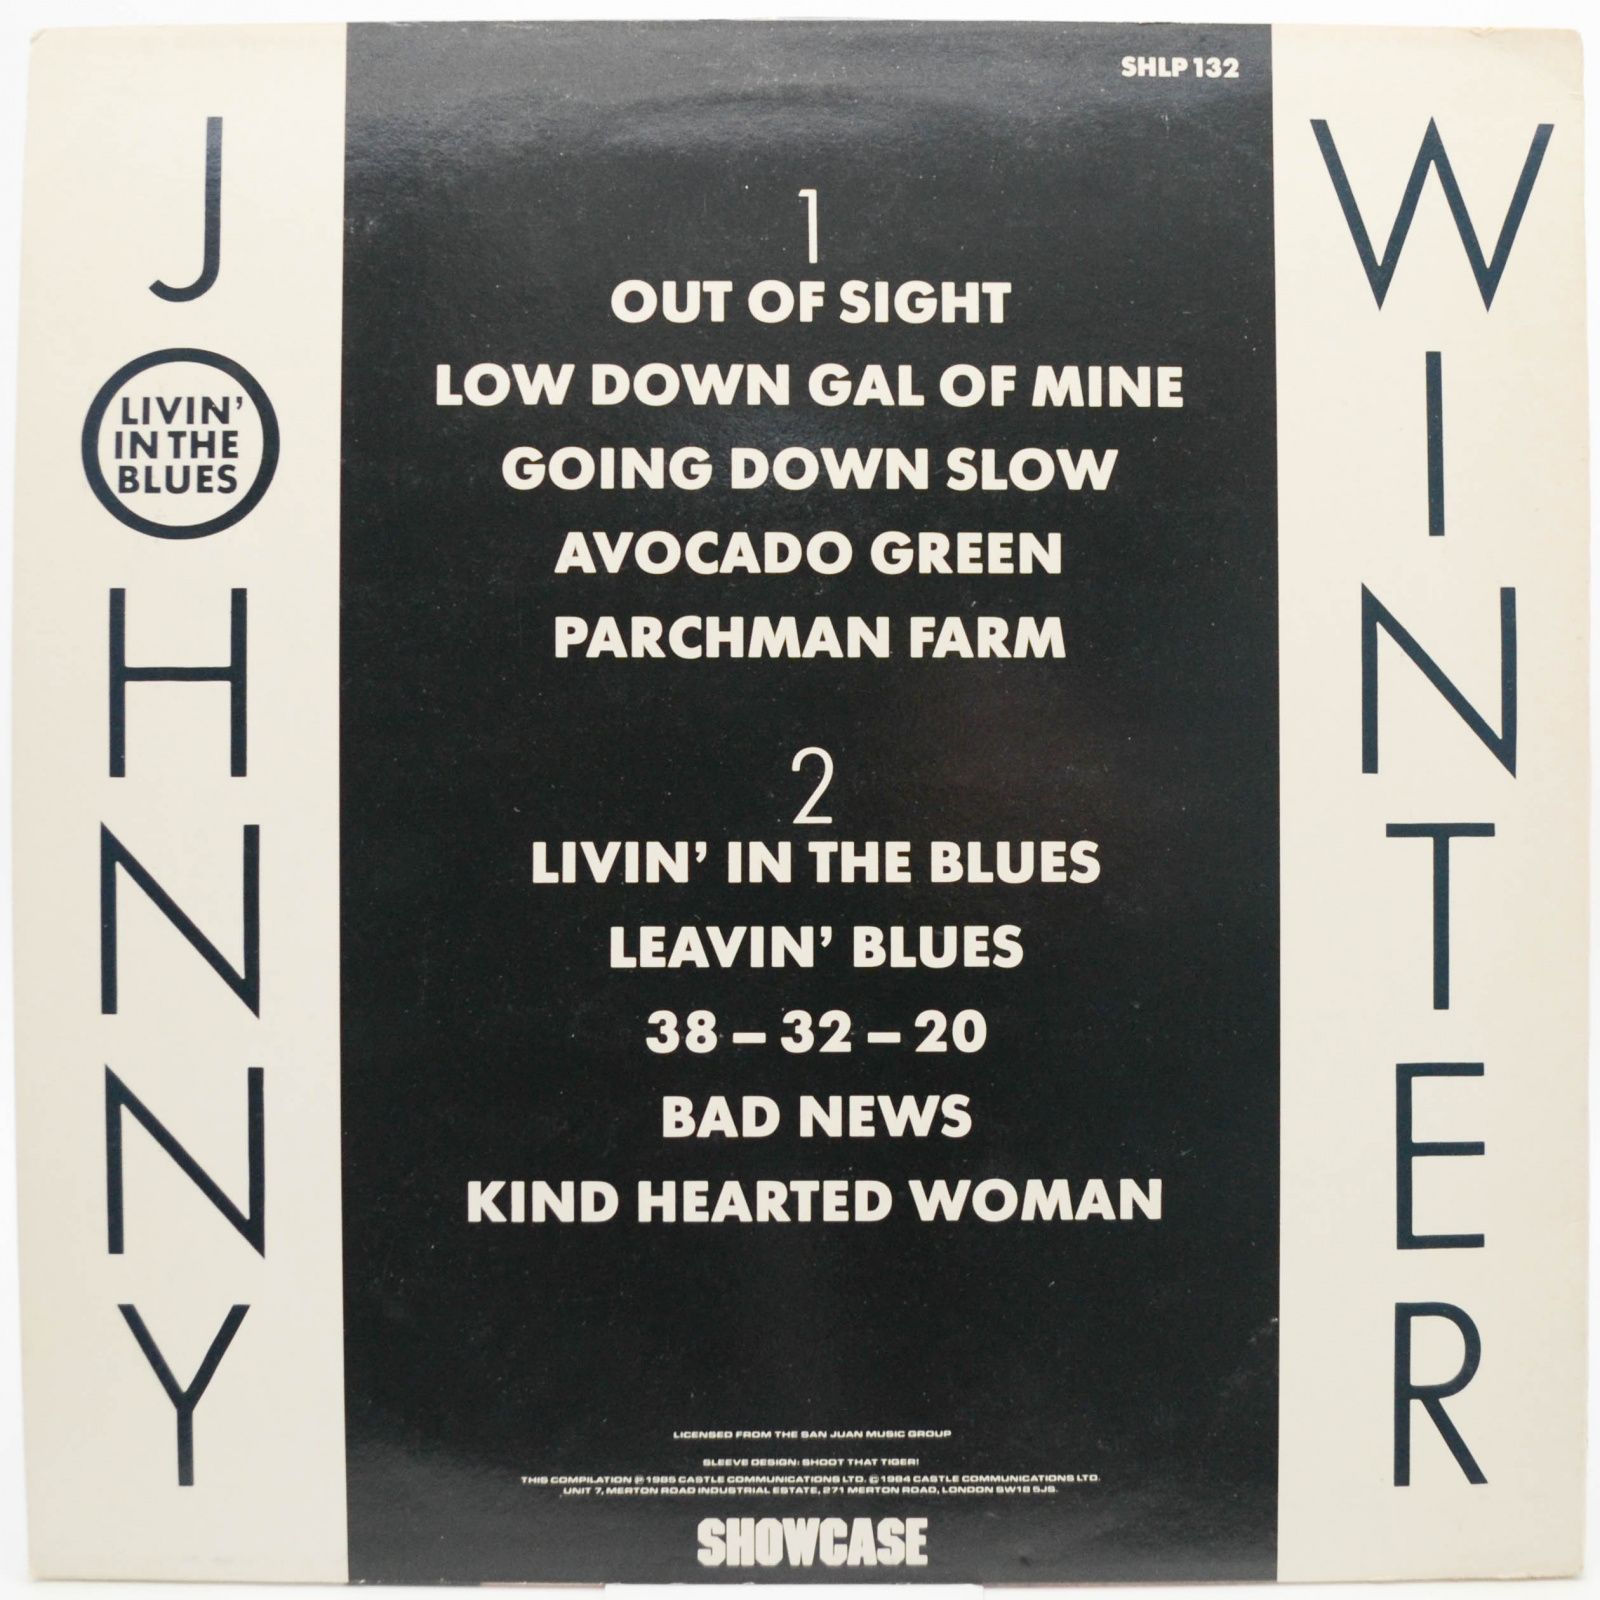 Johnny Winter — Livin' In The Blues (UK), 1985